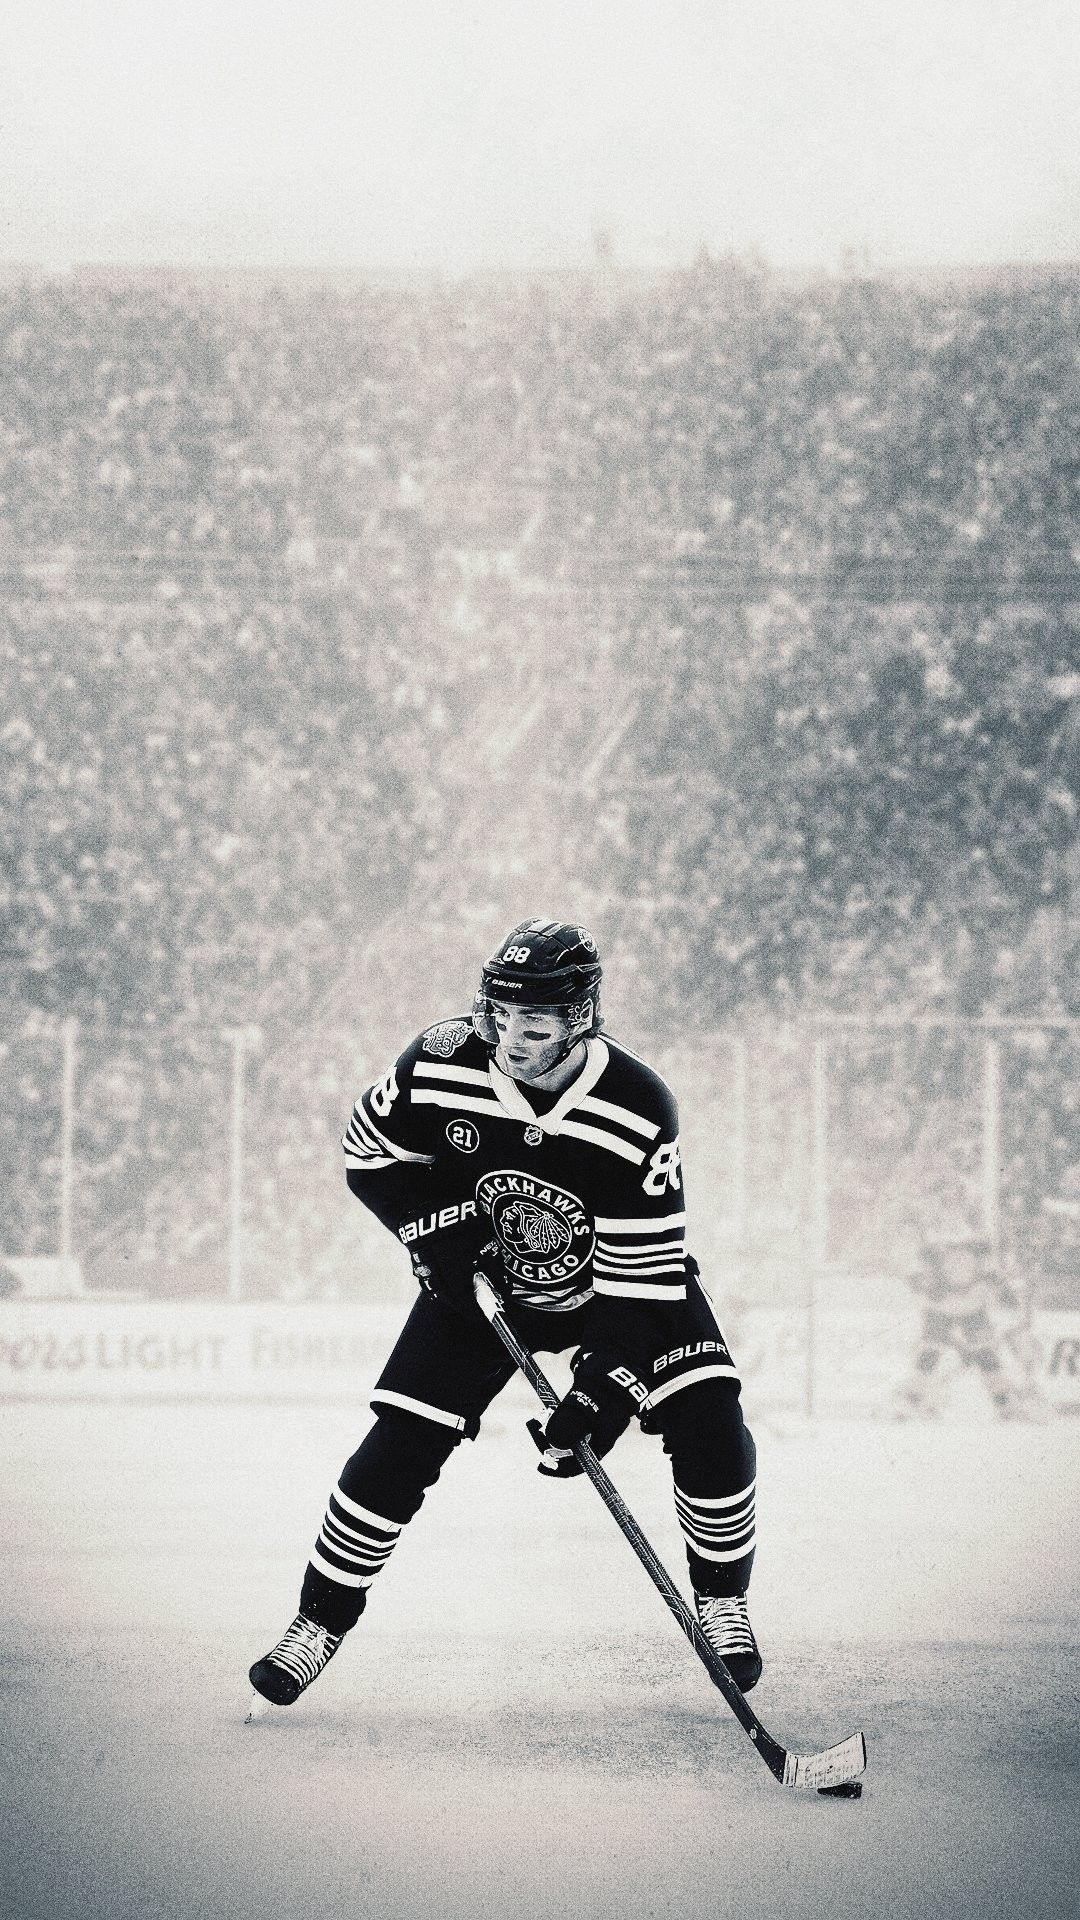 1080x1920 Patrick Kane Winter Classic (01/01/19) | Chicago blackhawks wallpaper, Chicago blackhawks hockey, Blackhawks hockey